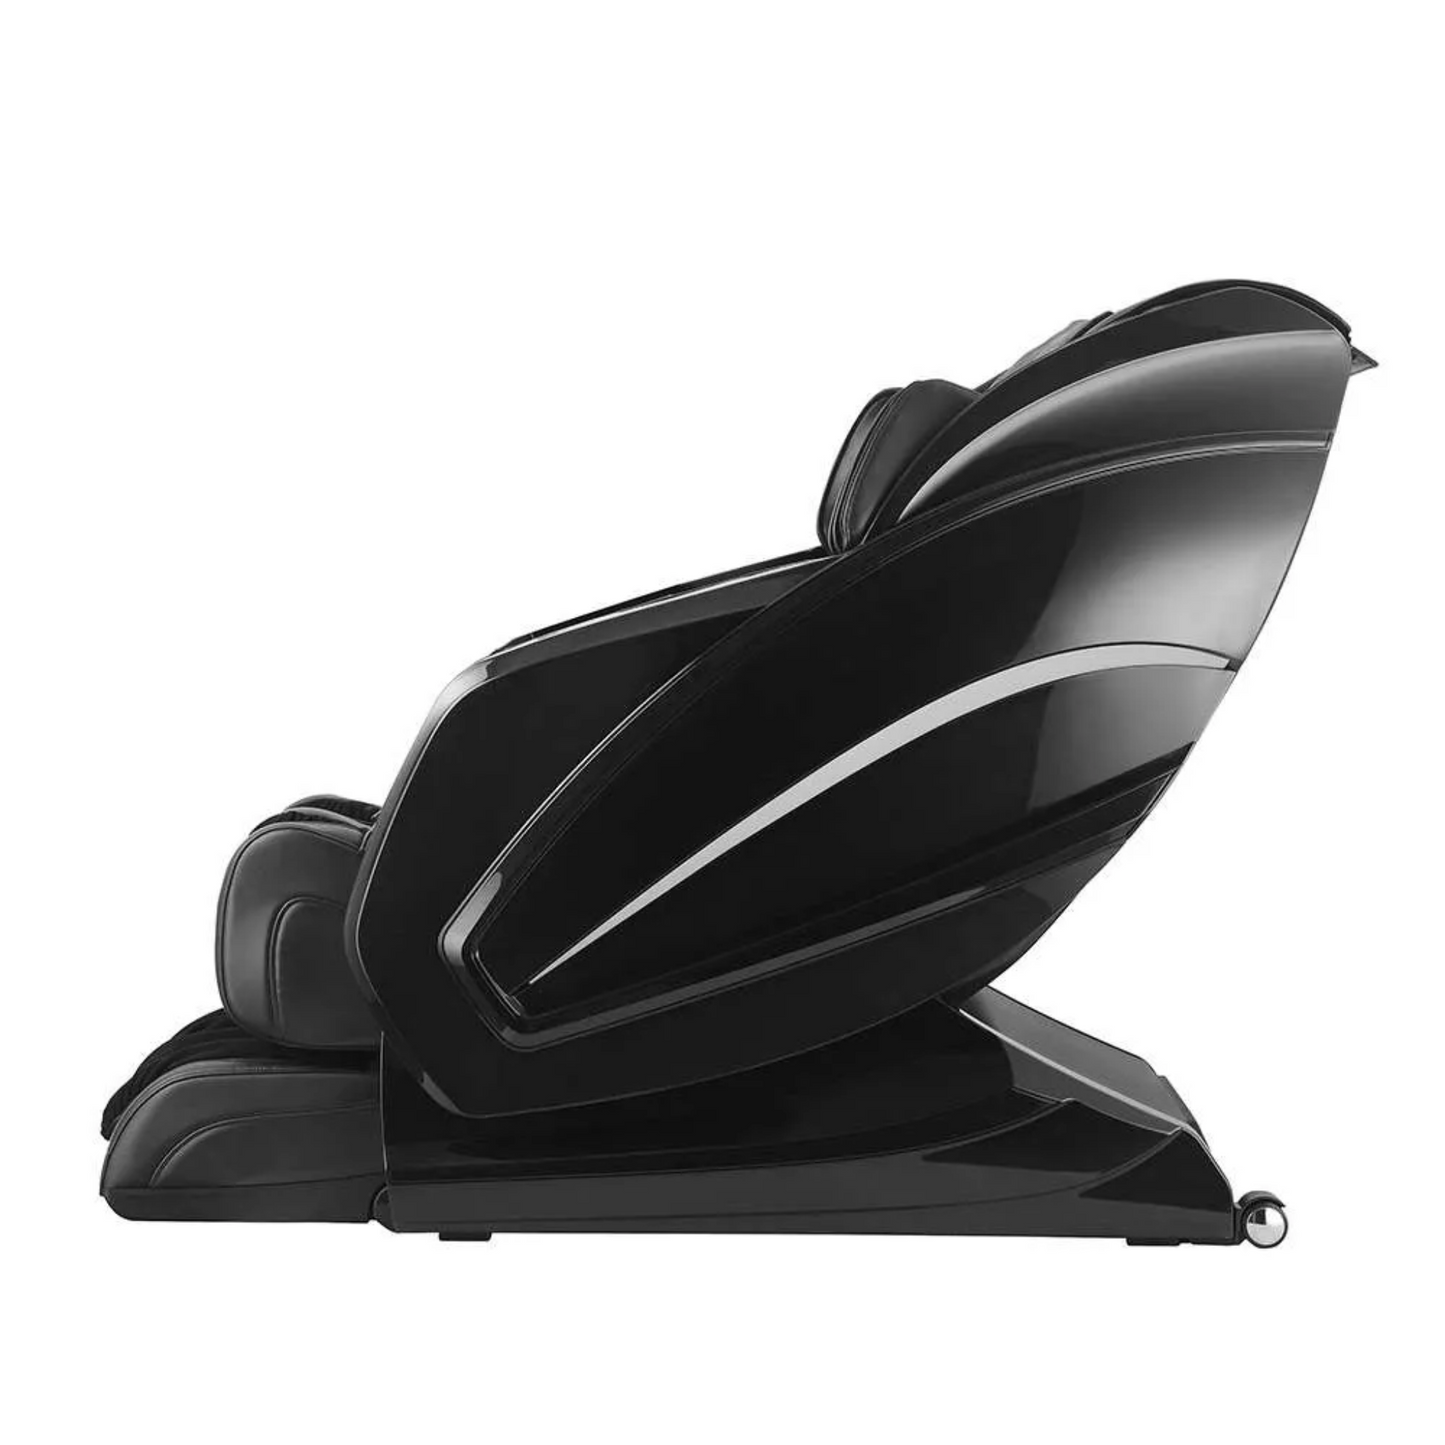 10 Series Royal Queen 4D Superior Massage Chair